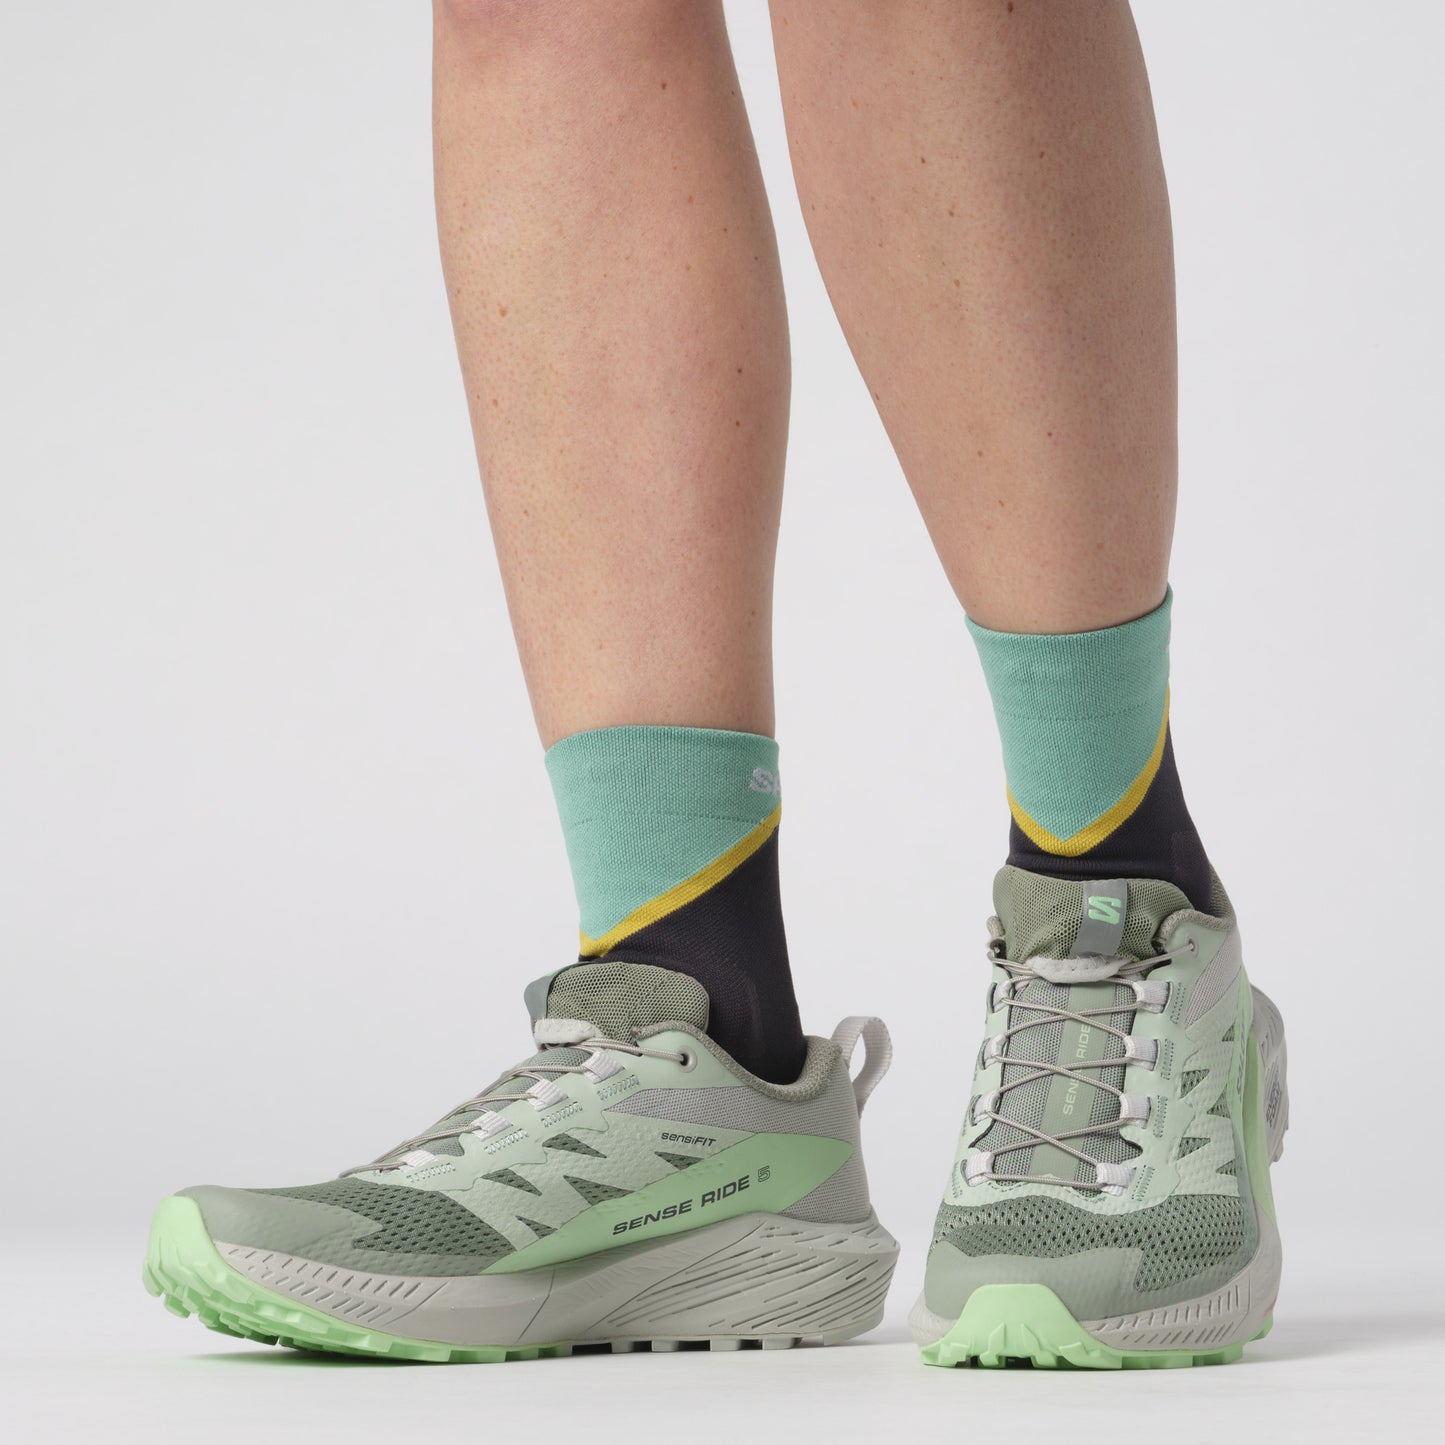 Salomon Sense Ride 5 Womens Trail Running Shoes - Lily Pad/Metal/Green Ash